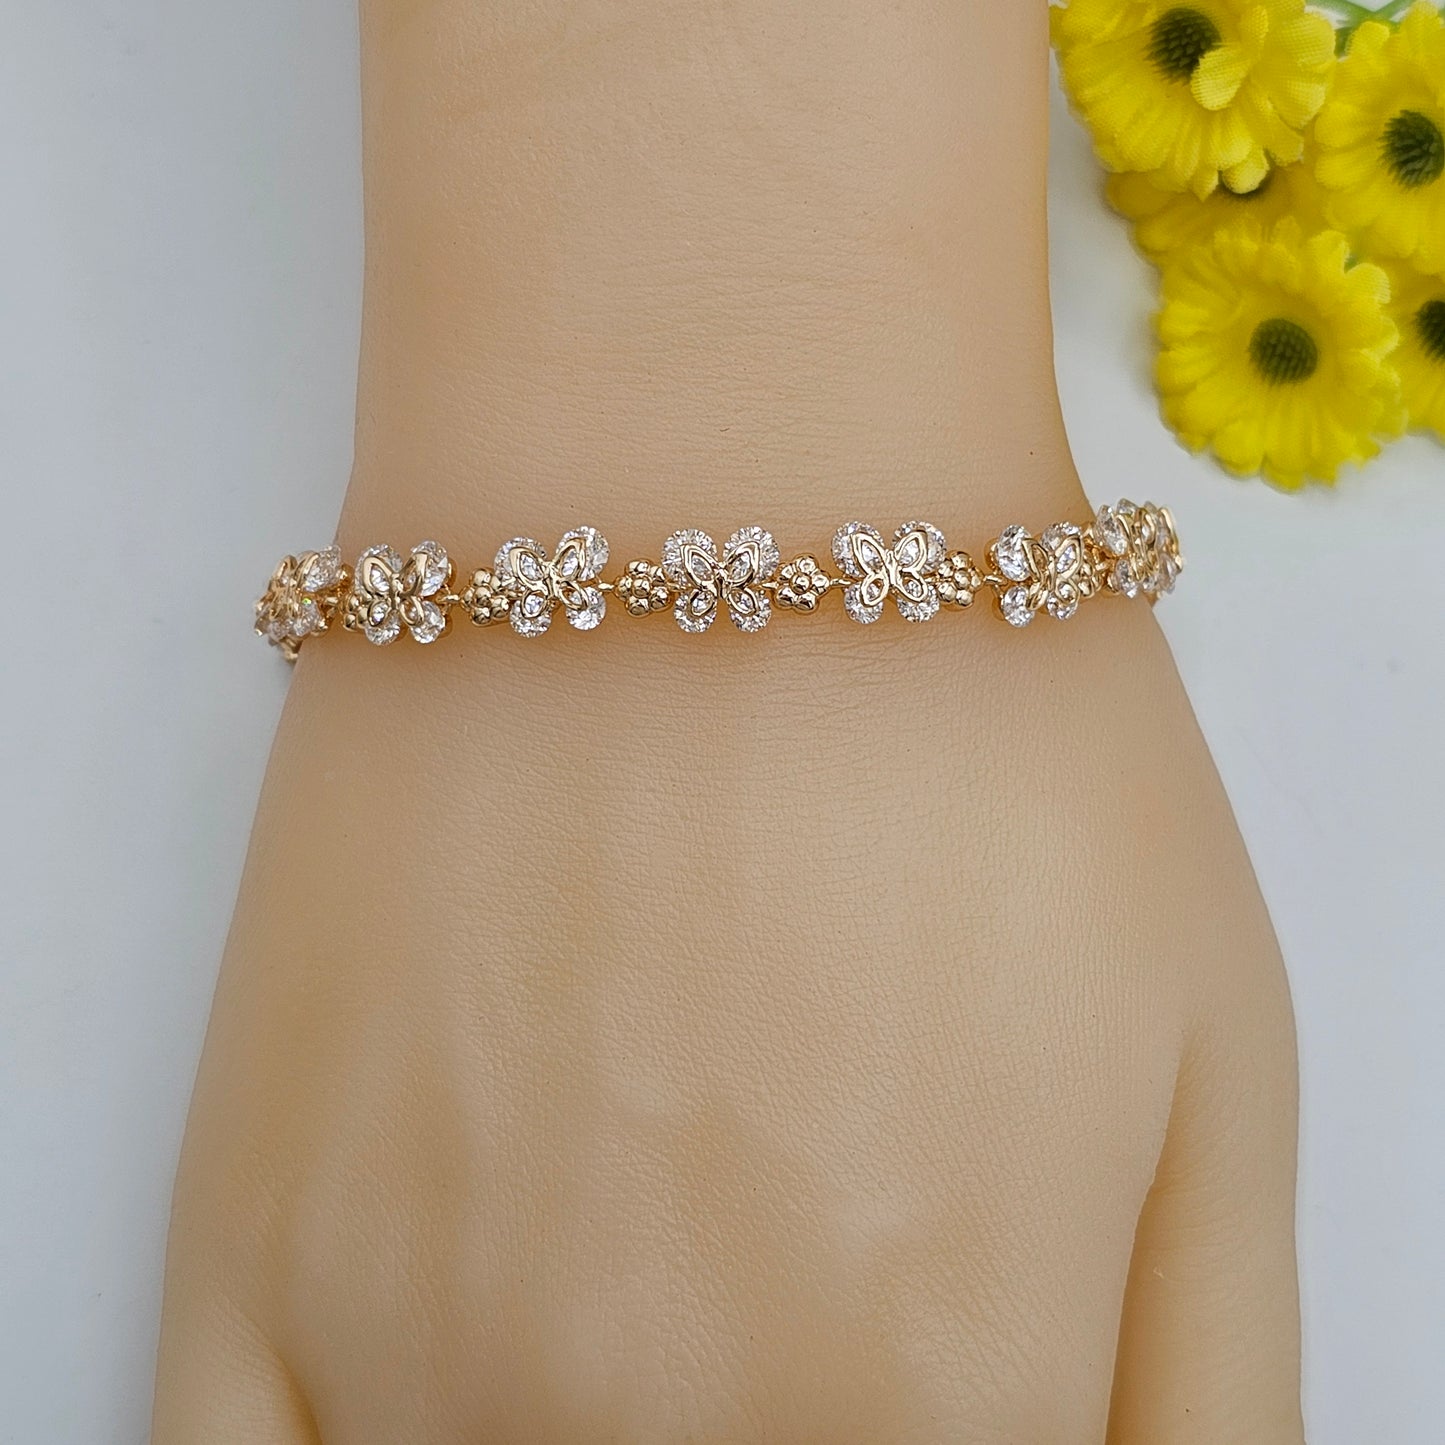 Bracelets - 18K Gold Plated. Butterflies - Clear Crystals - Bracelet.